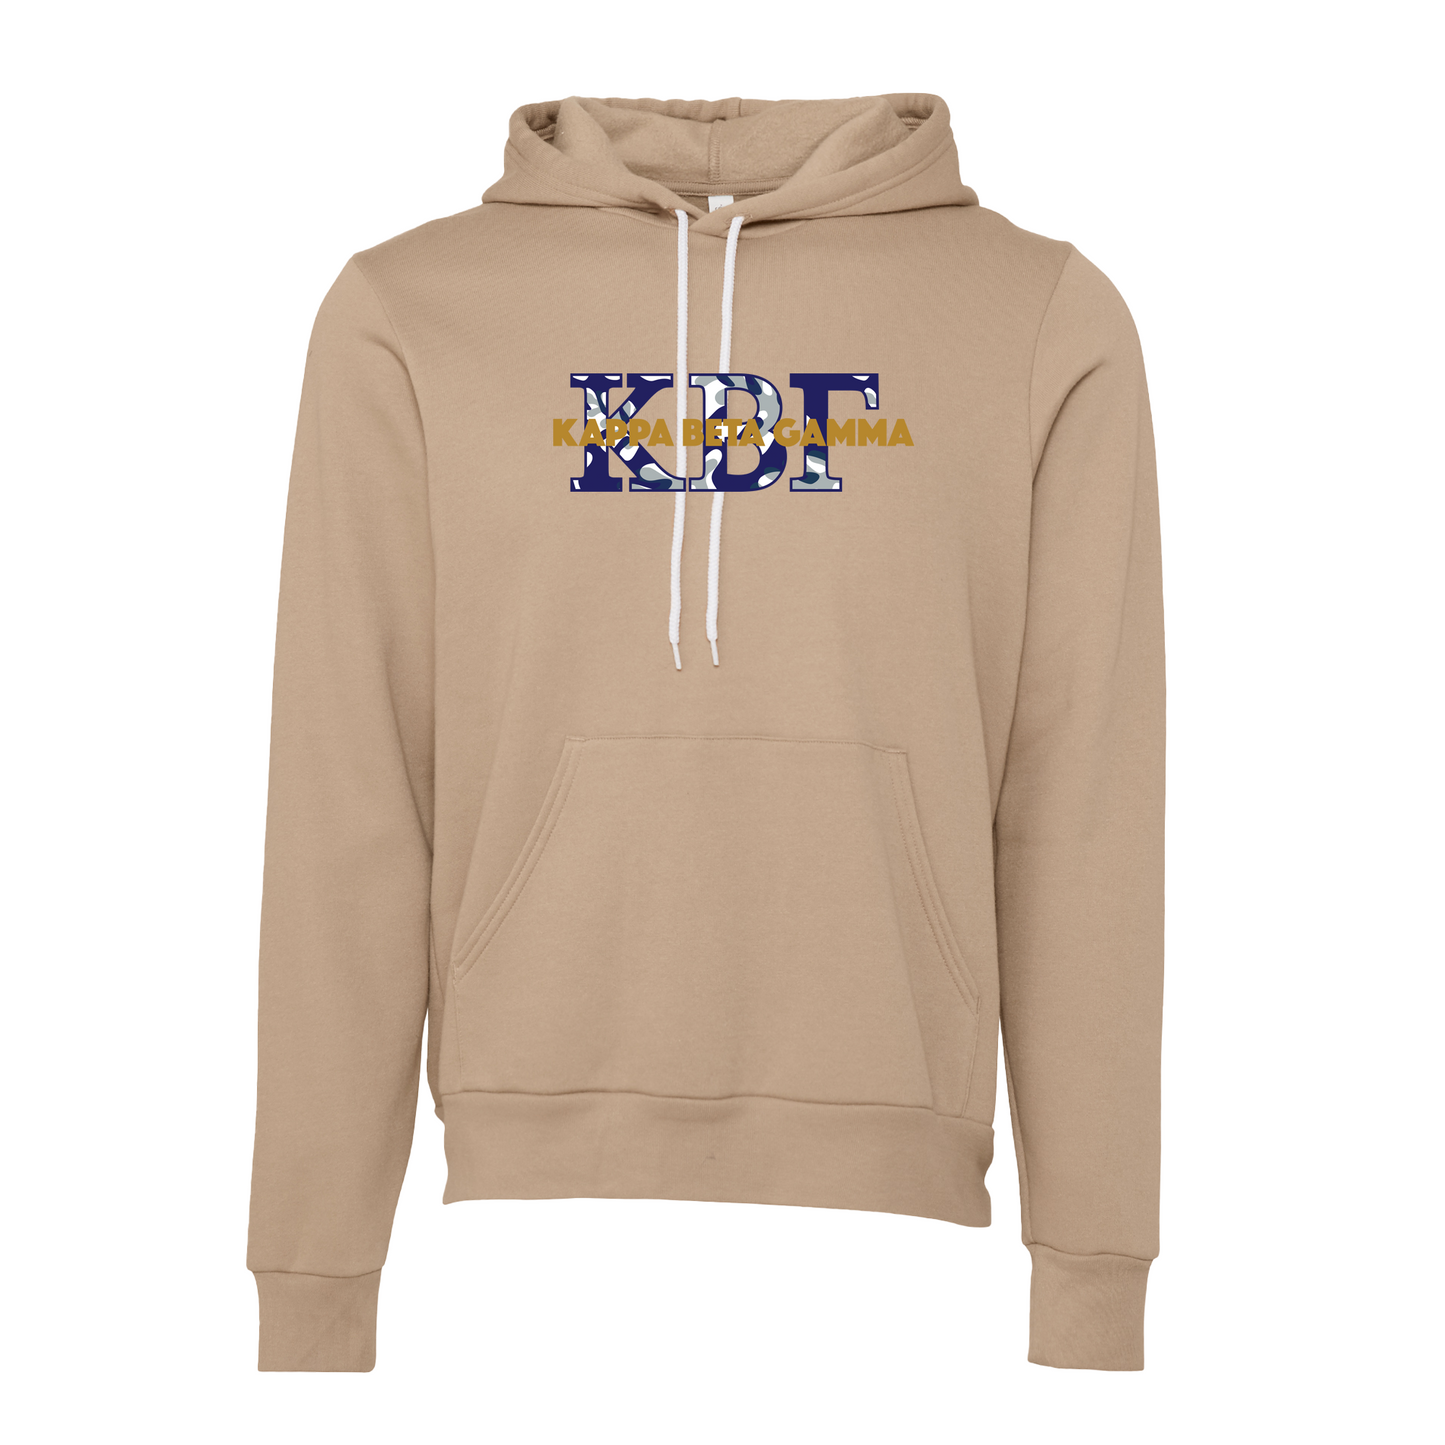 Kappa Beta Gamma Applique Letters Hooded Sweatshirt